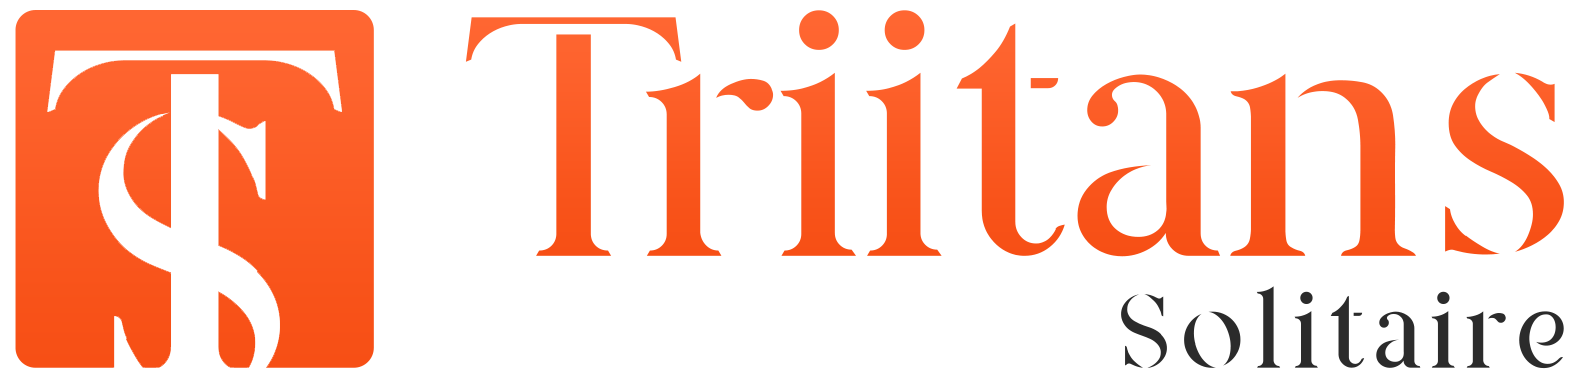 Triitans-Solitaire-Logo